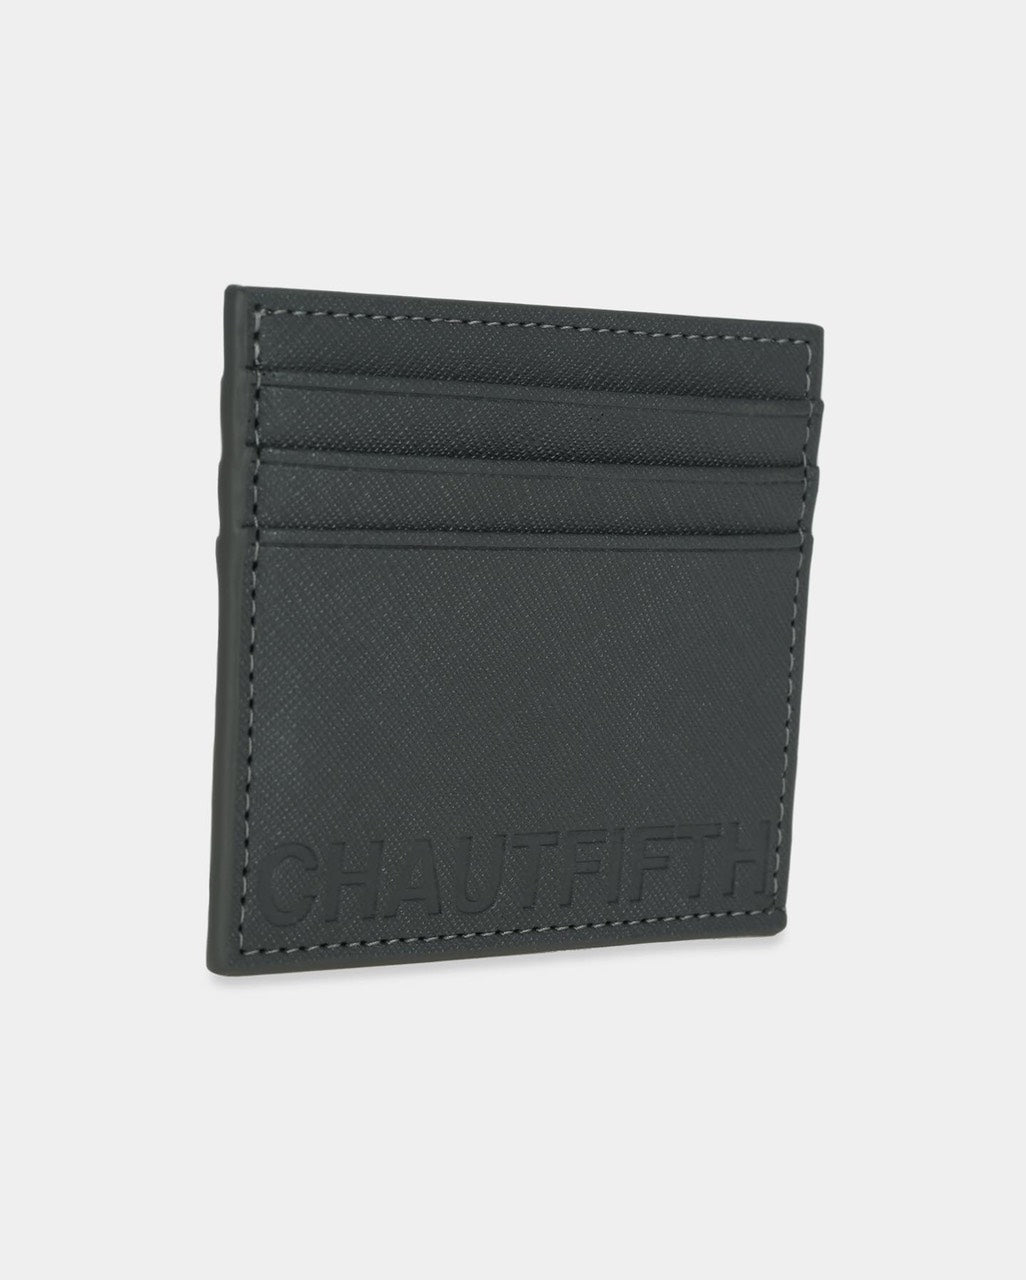 CHAUTFIFTH gray card wallet